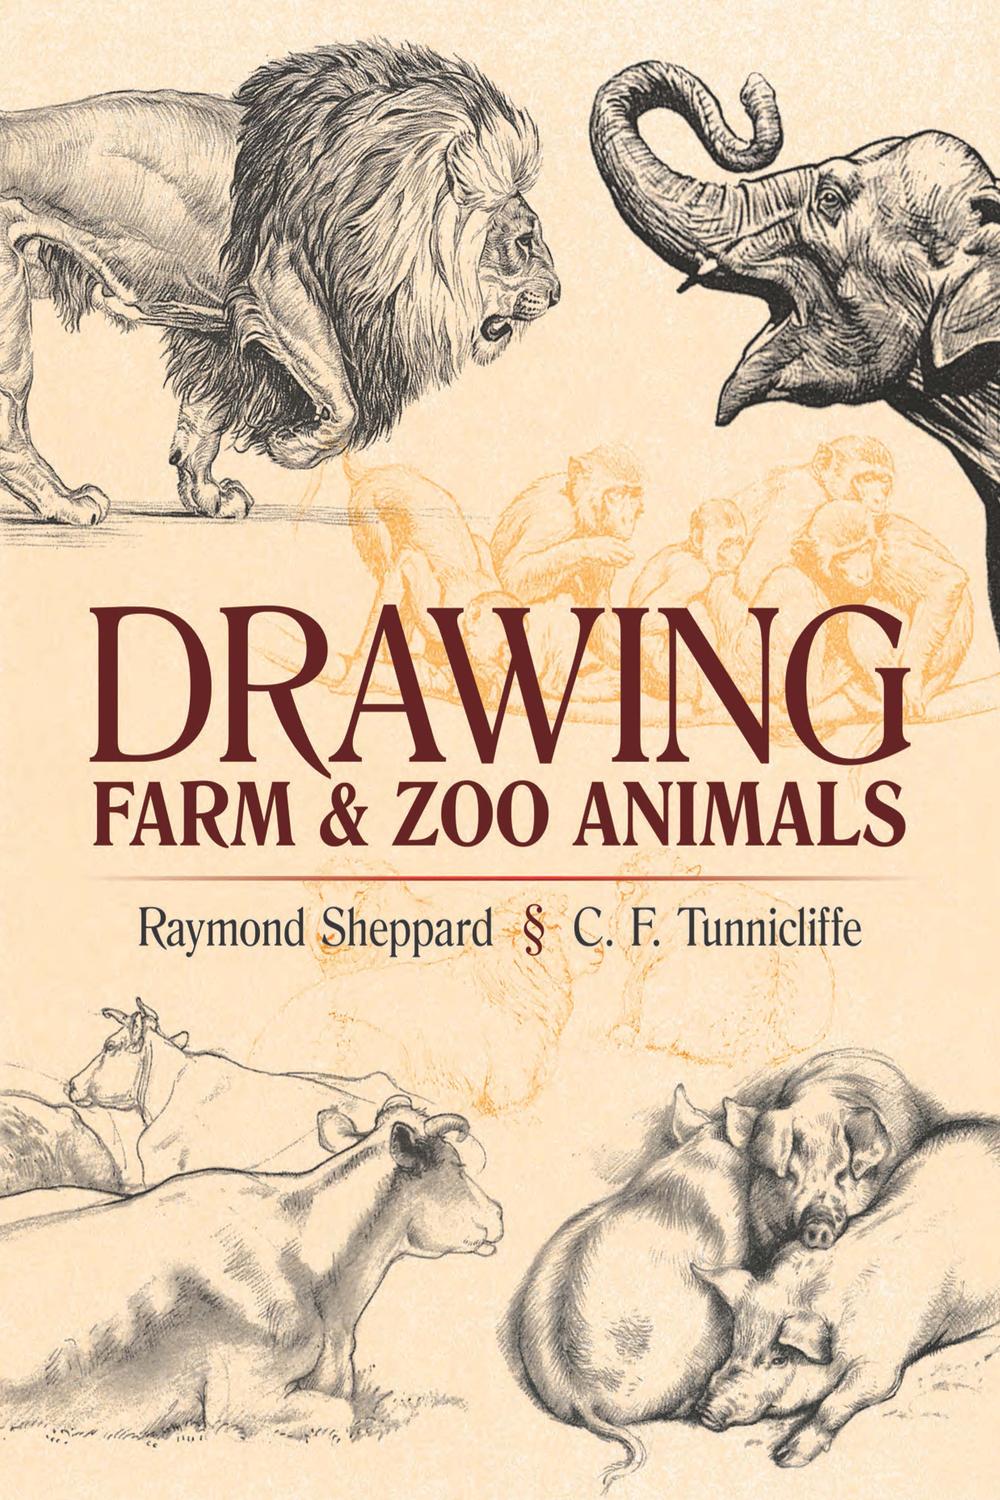 PDF] Drawing Farm and Zoo Animals by Raymond Sheppard eBook | Perlego